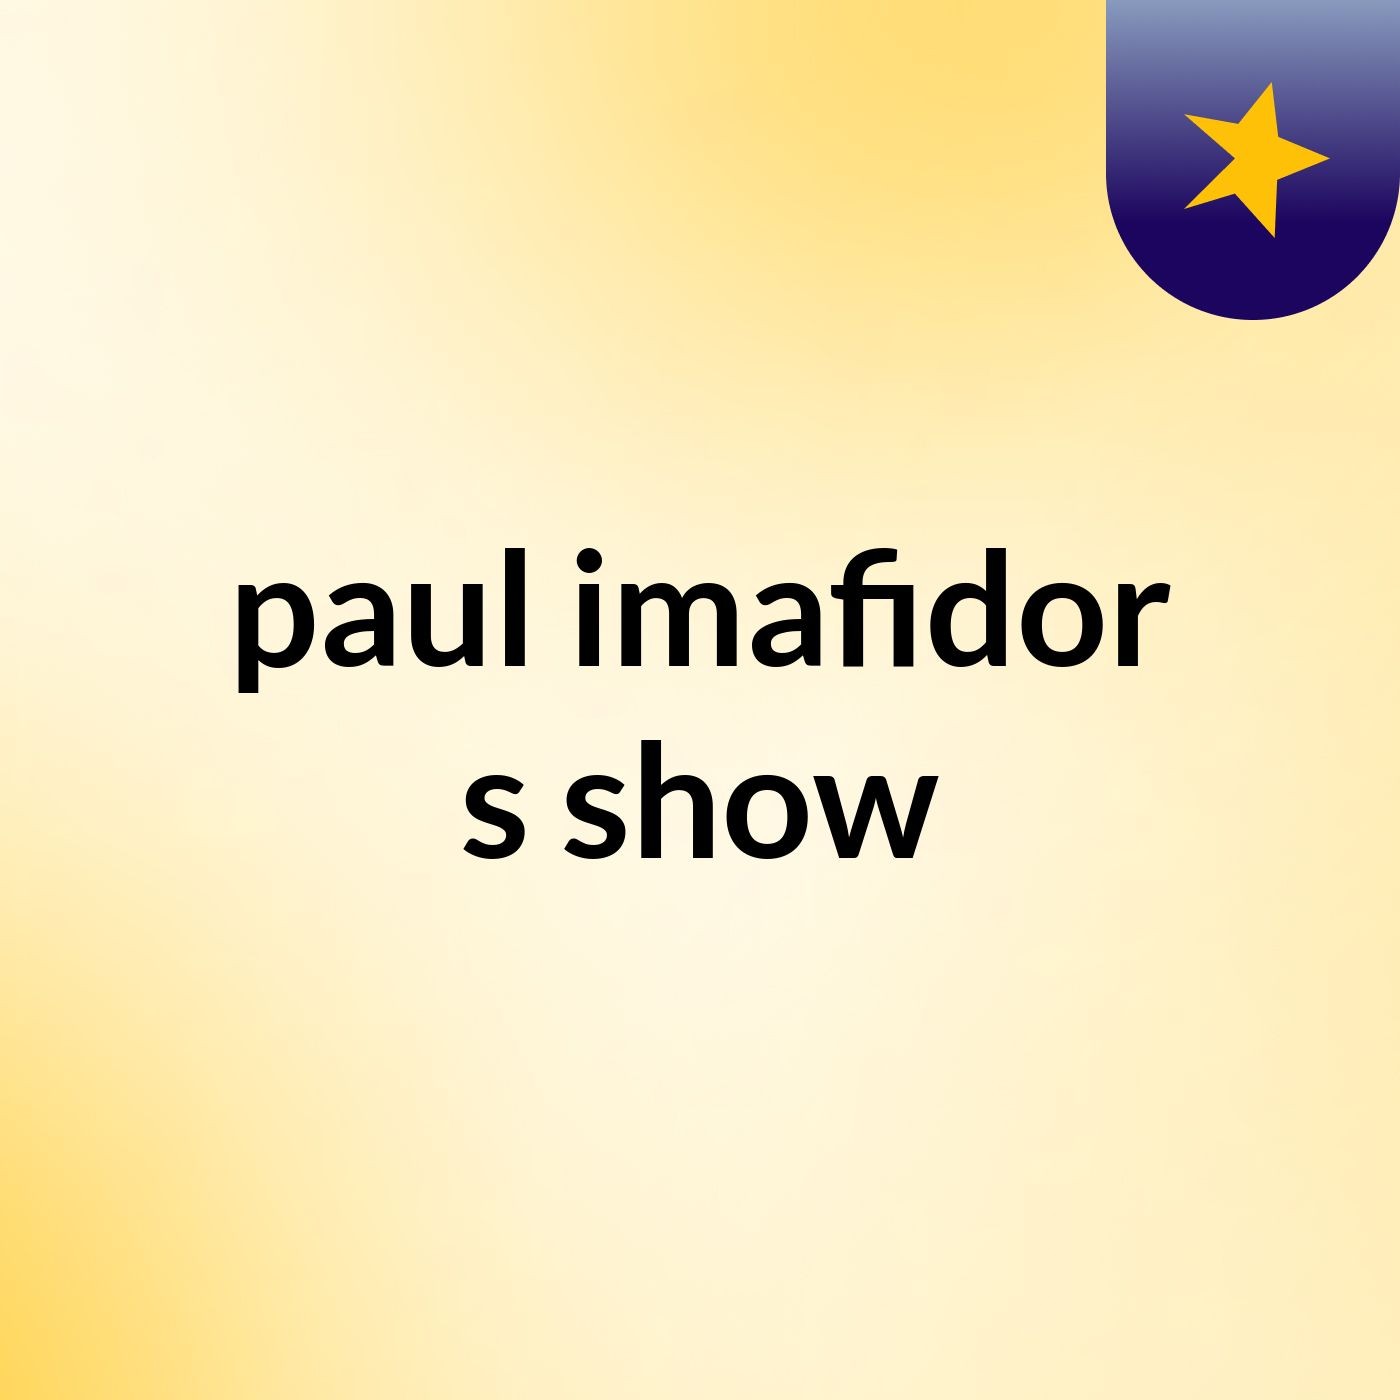 Episode 2 - paul imafidor's show